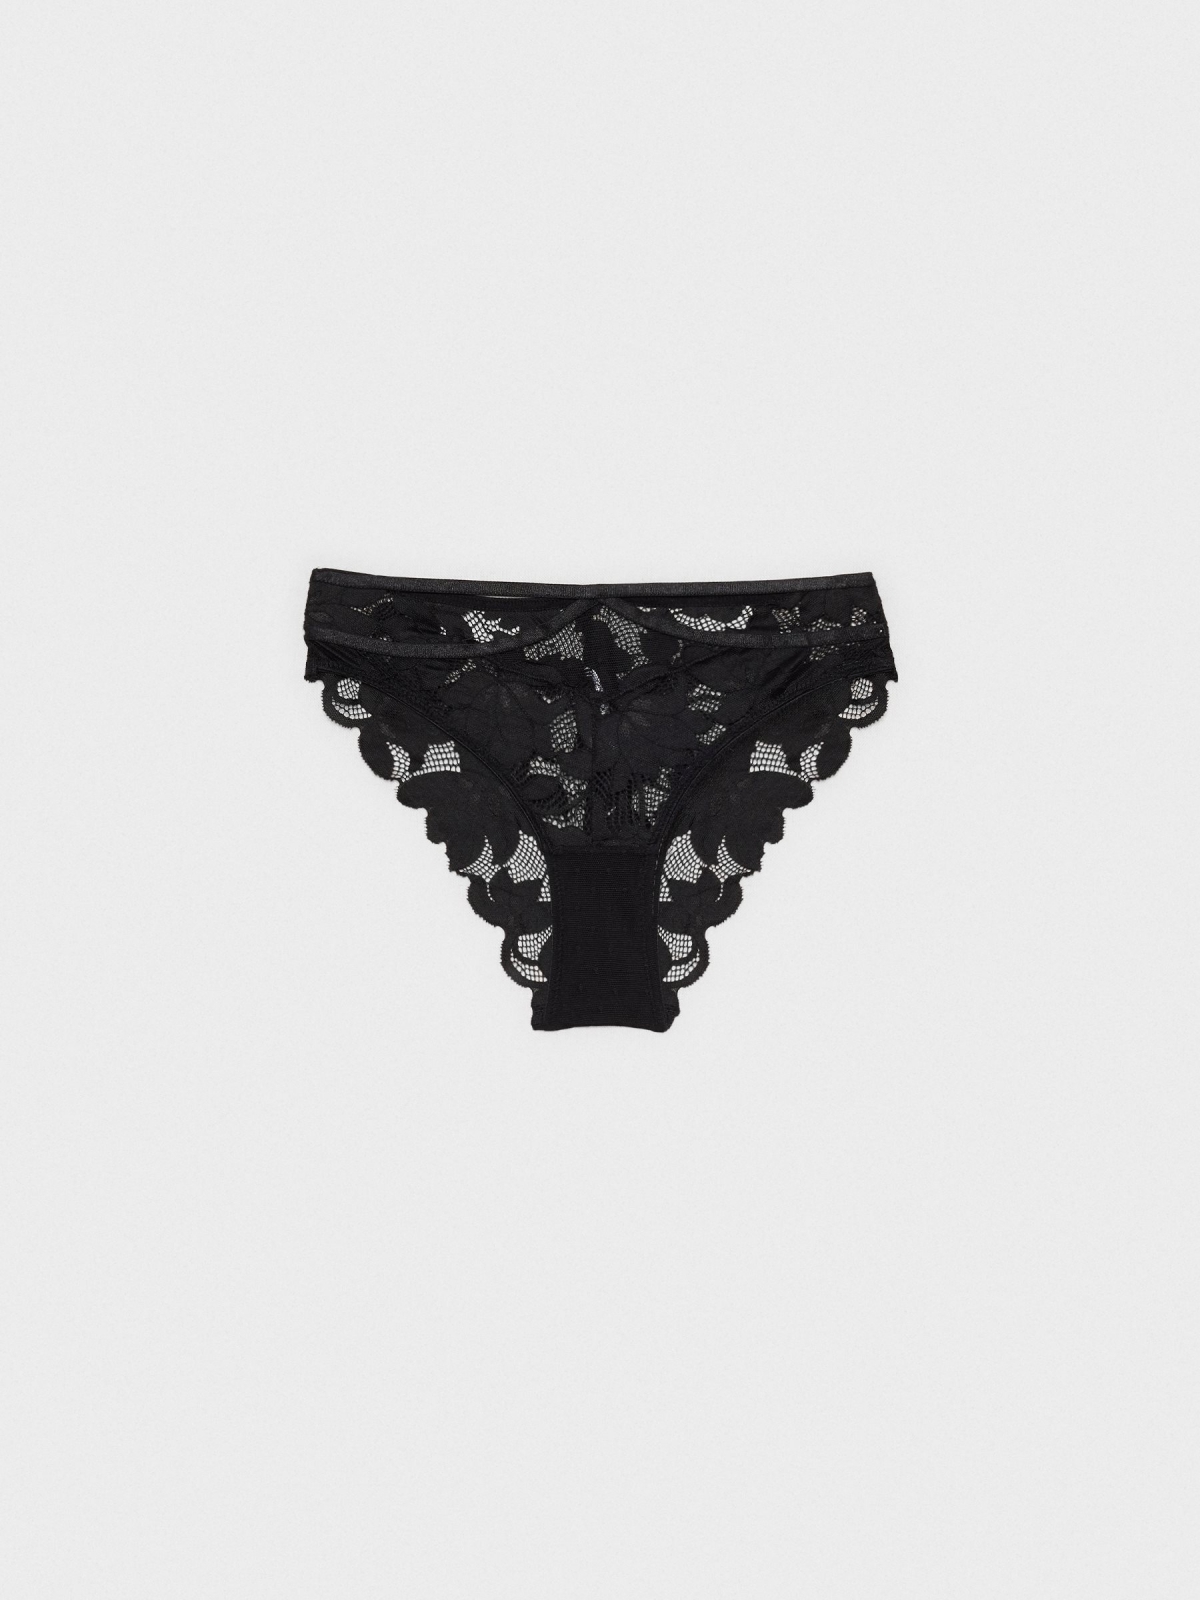 Black lace panties black